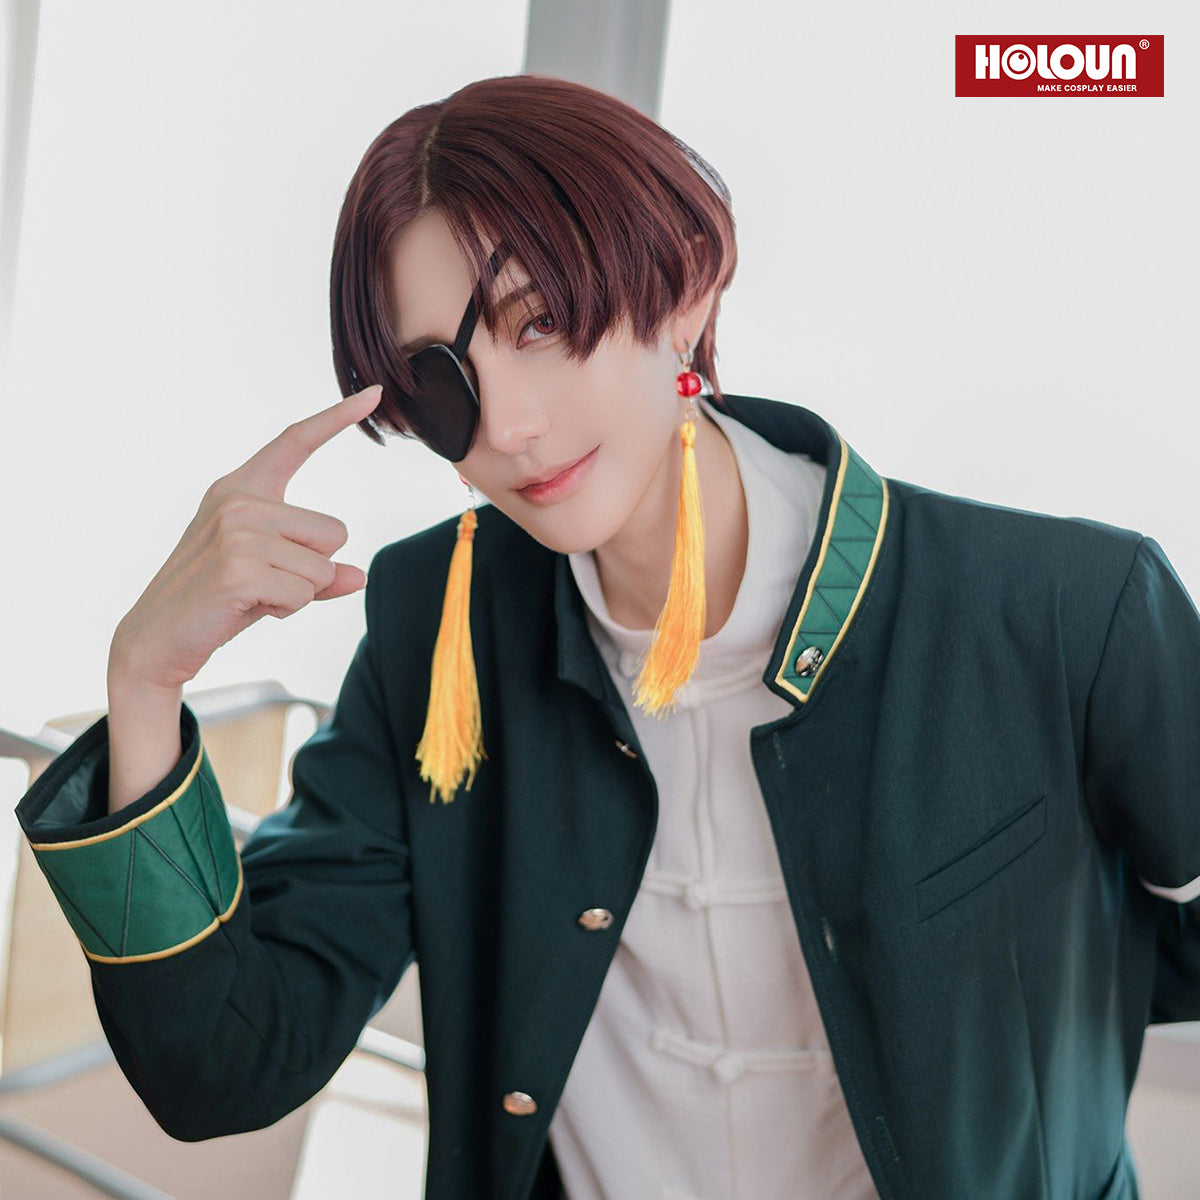 HOLOUN Wind Breaker Anime Hayato Suo Cosplay Costume Wig Uniform Green Jacket Black Pants White Kung Fu Shirt Earings Eyepatch